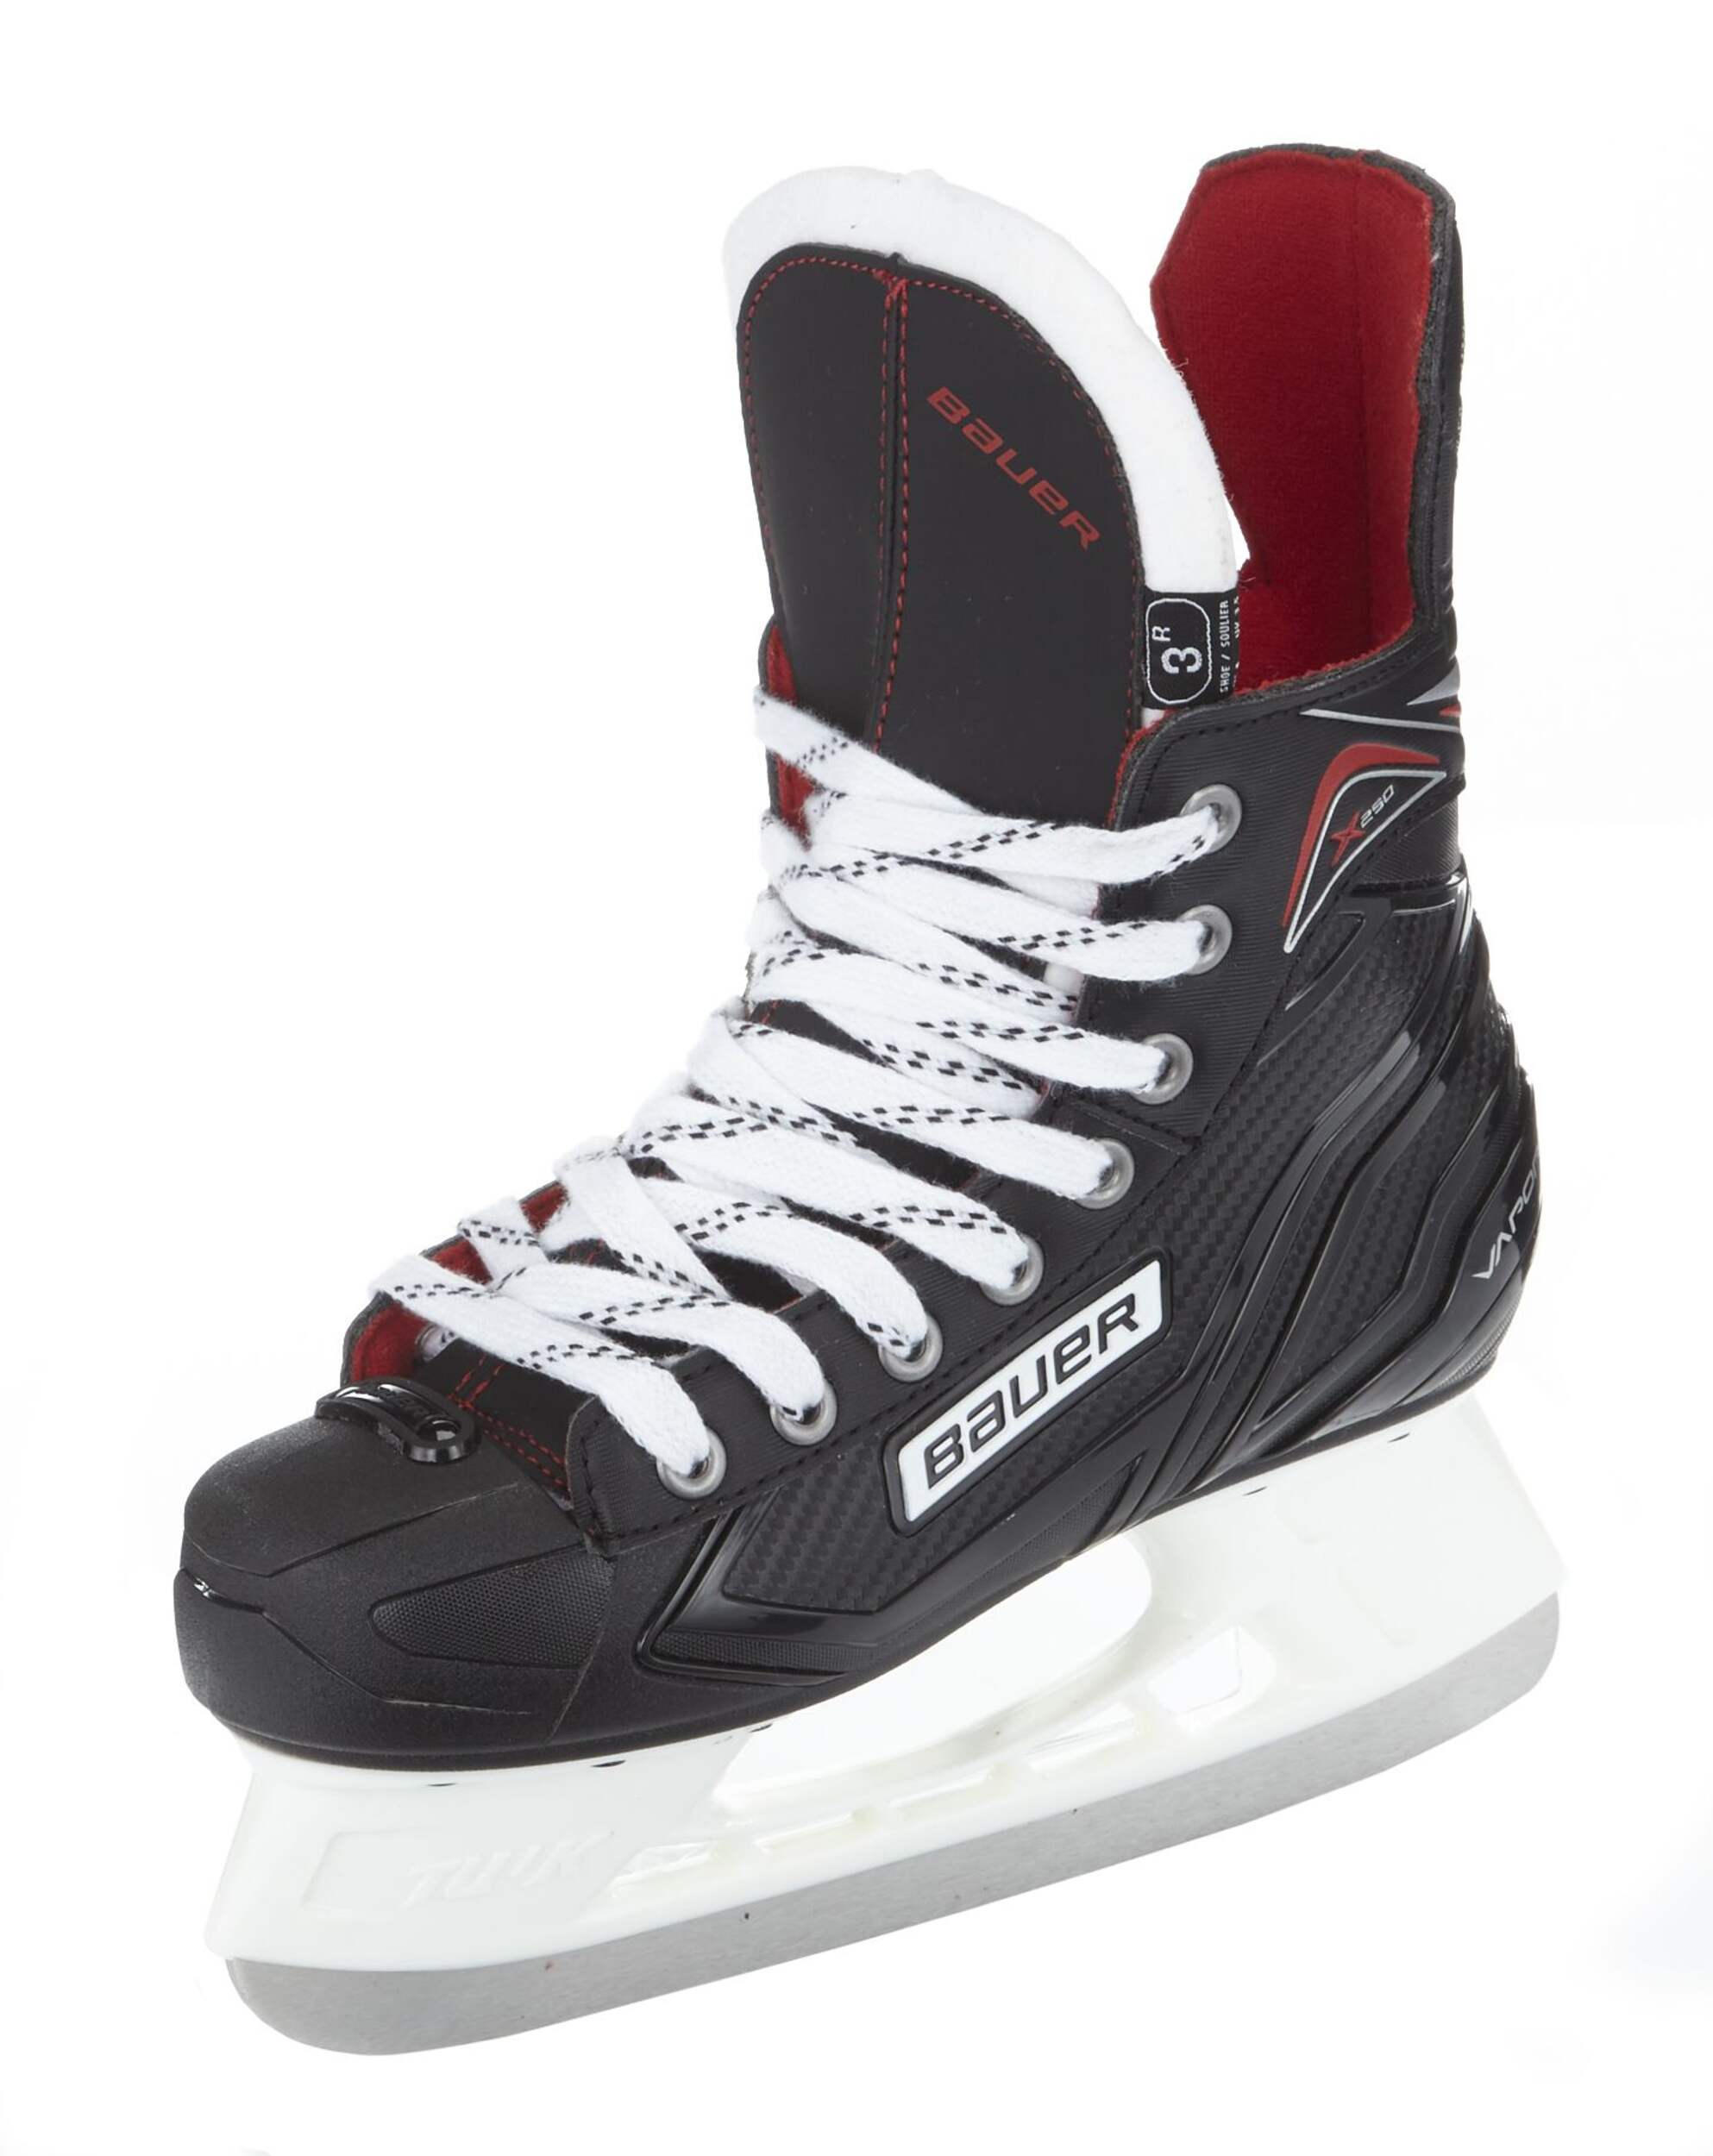 BAUER Vapor X250 Junior Hockey Skates - Black/Red (Size 3)